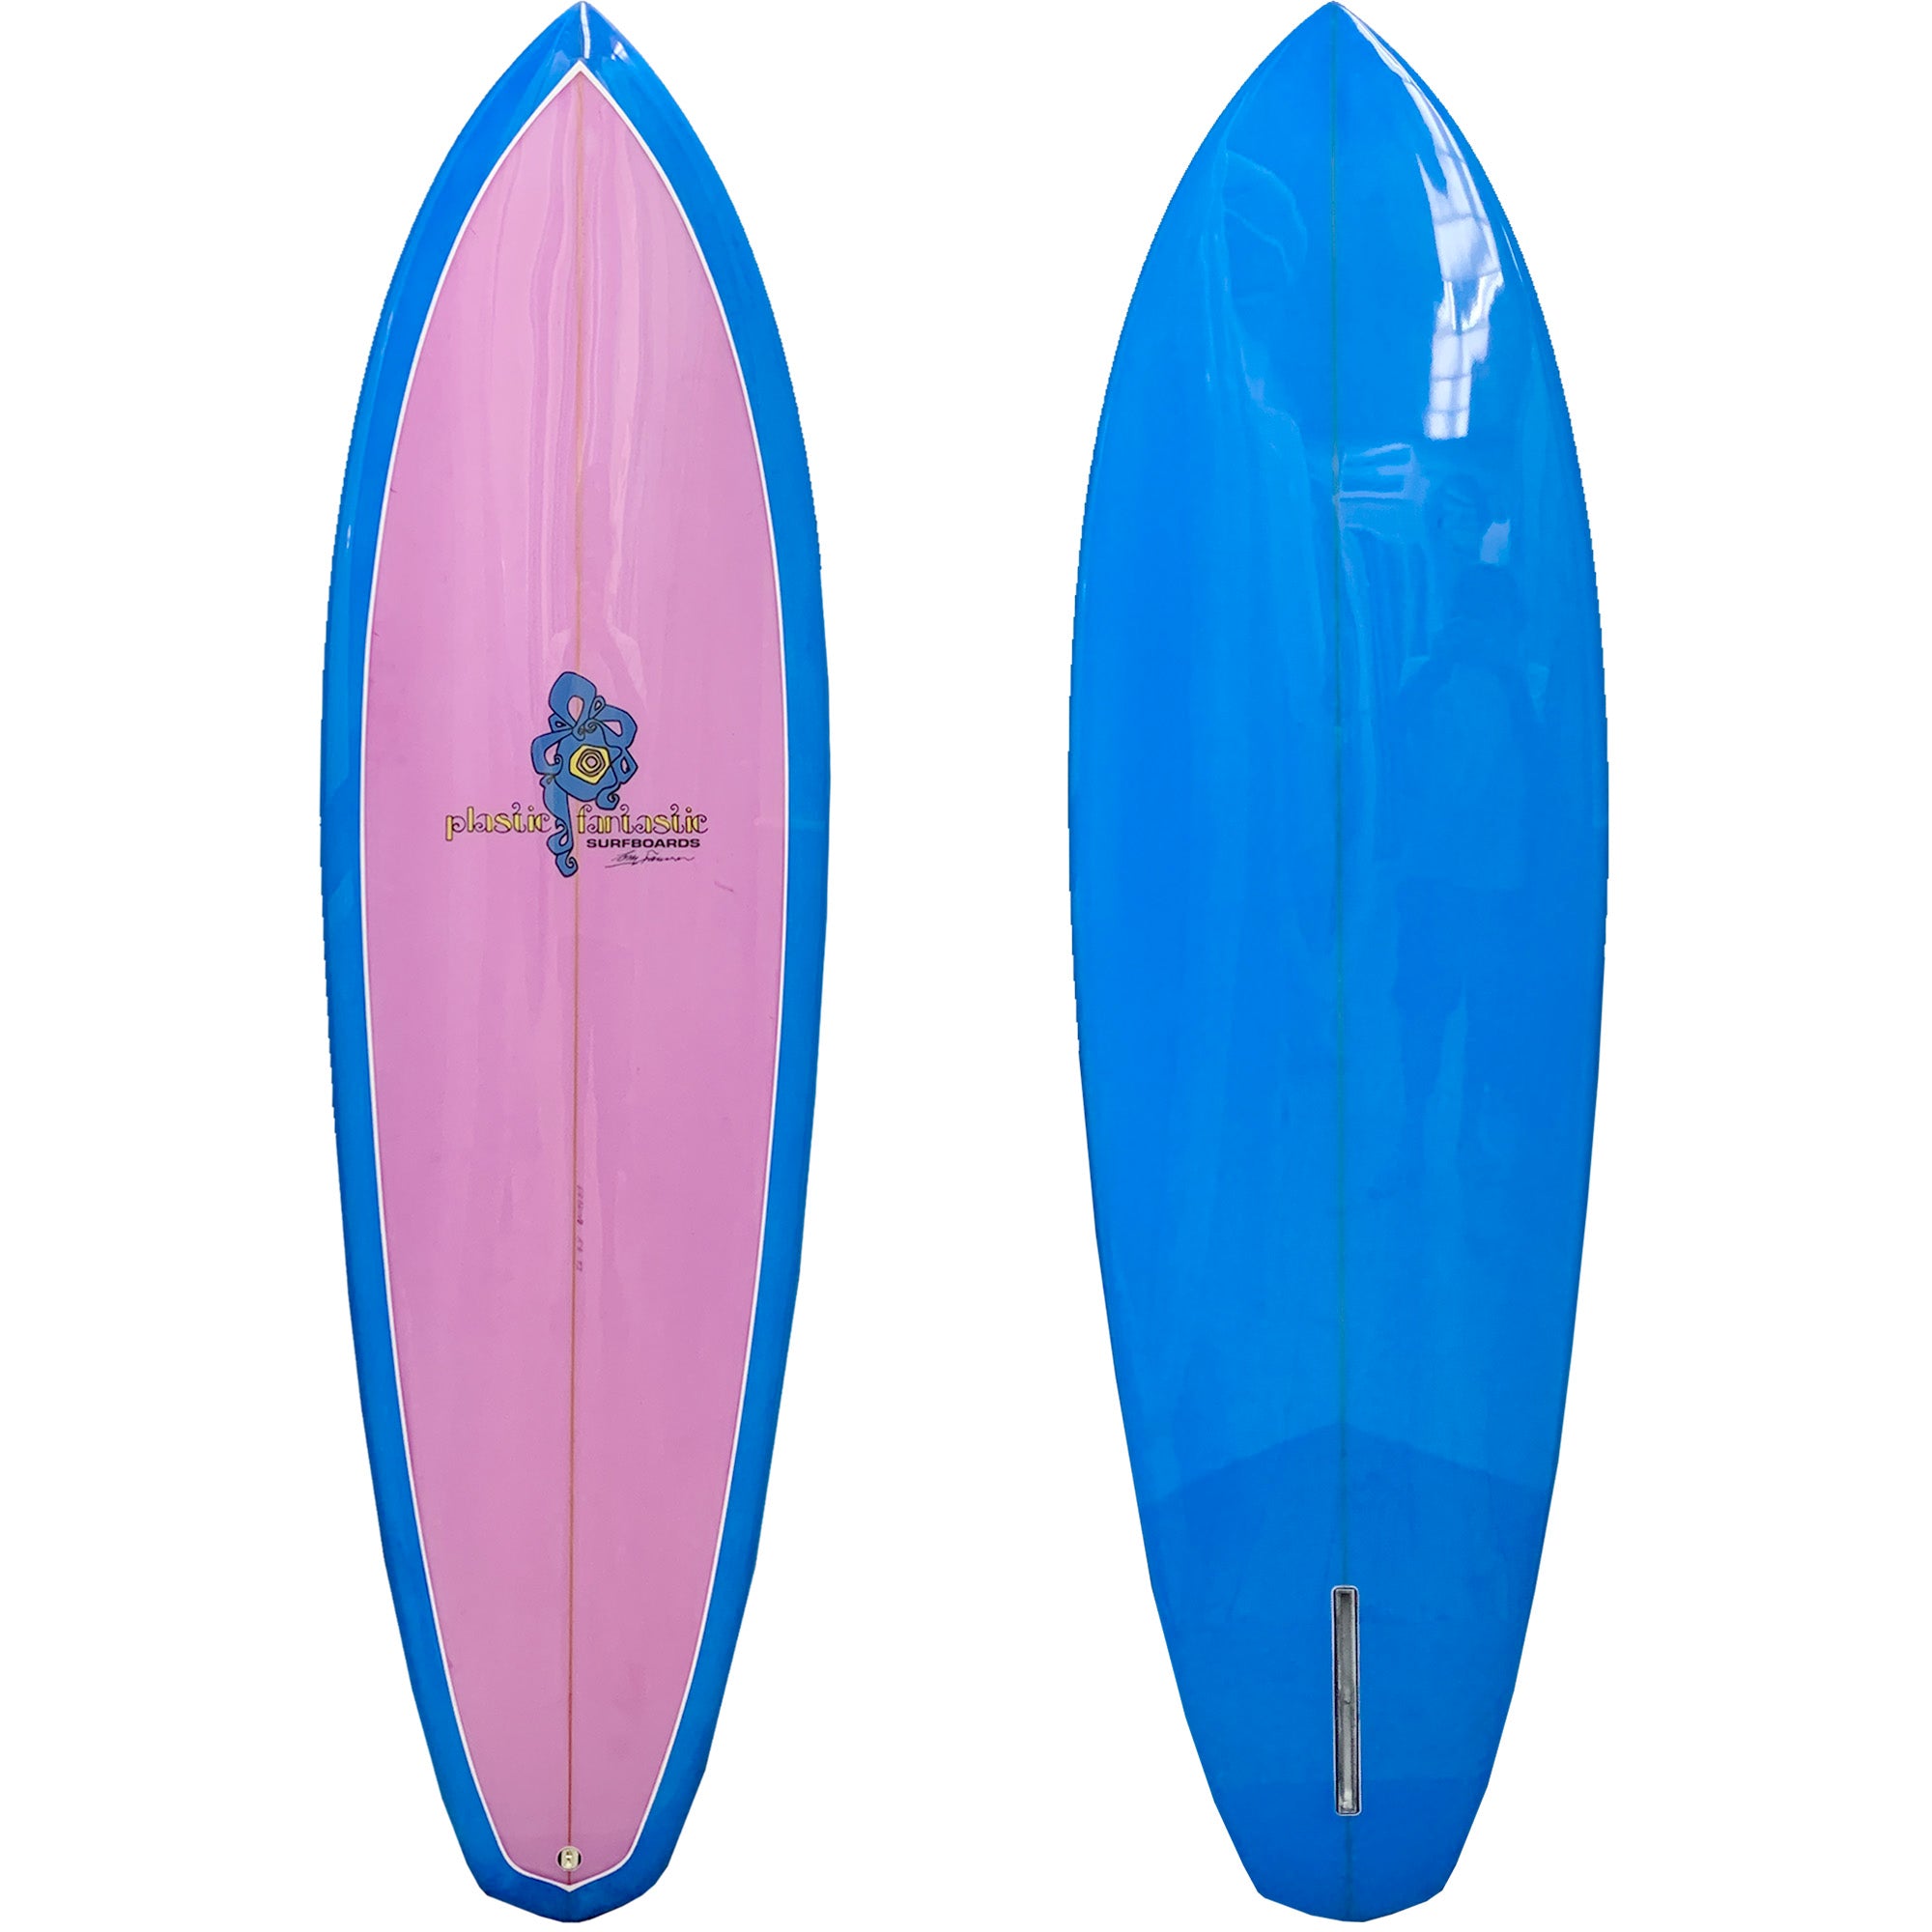 Plastic Fantastic Single Fin Surfboard